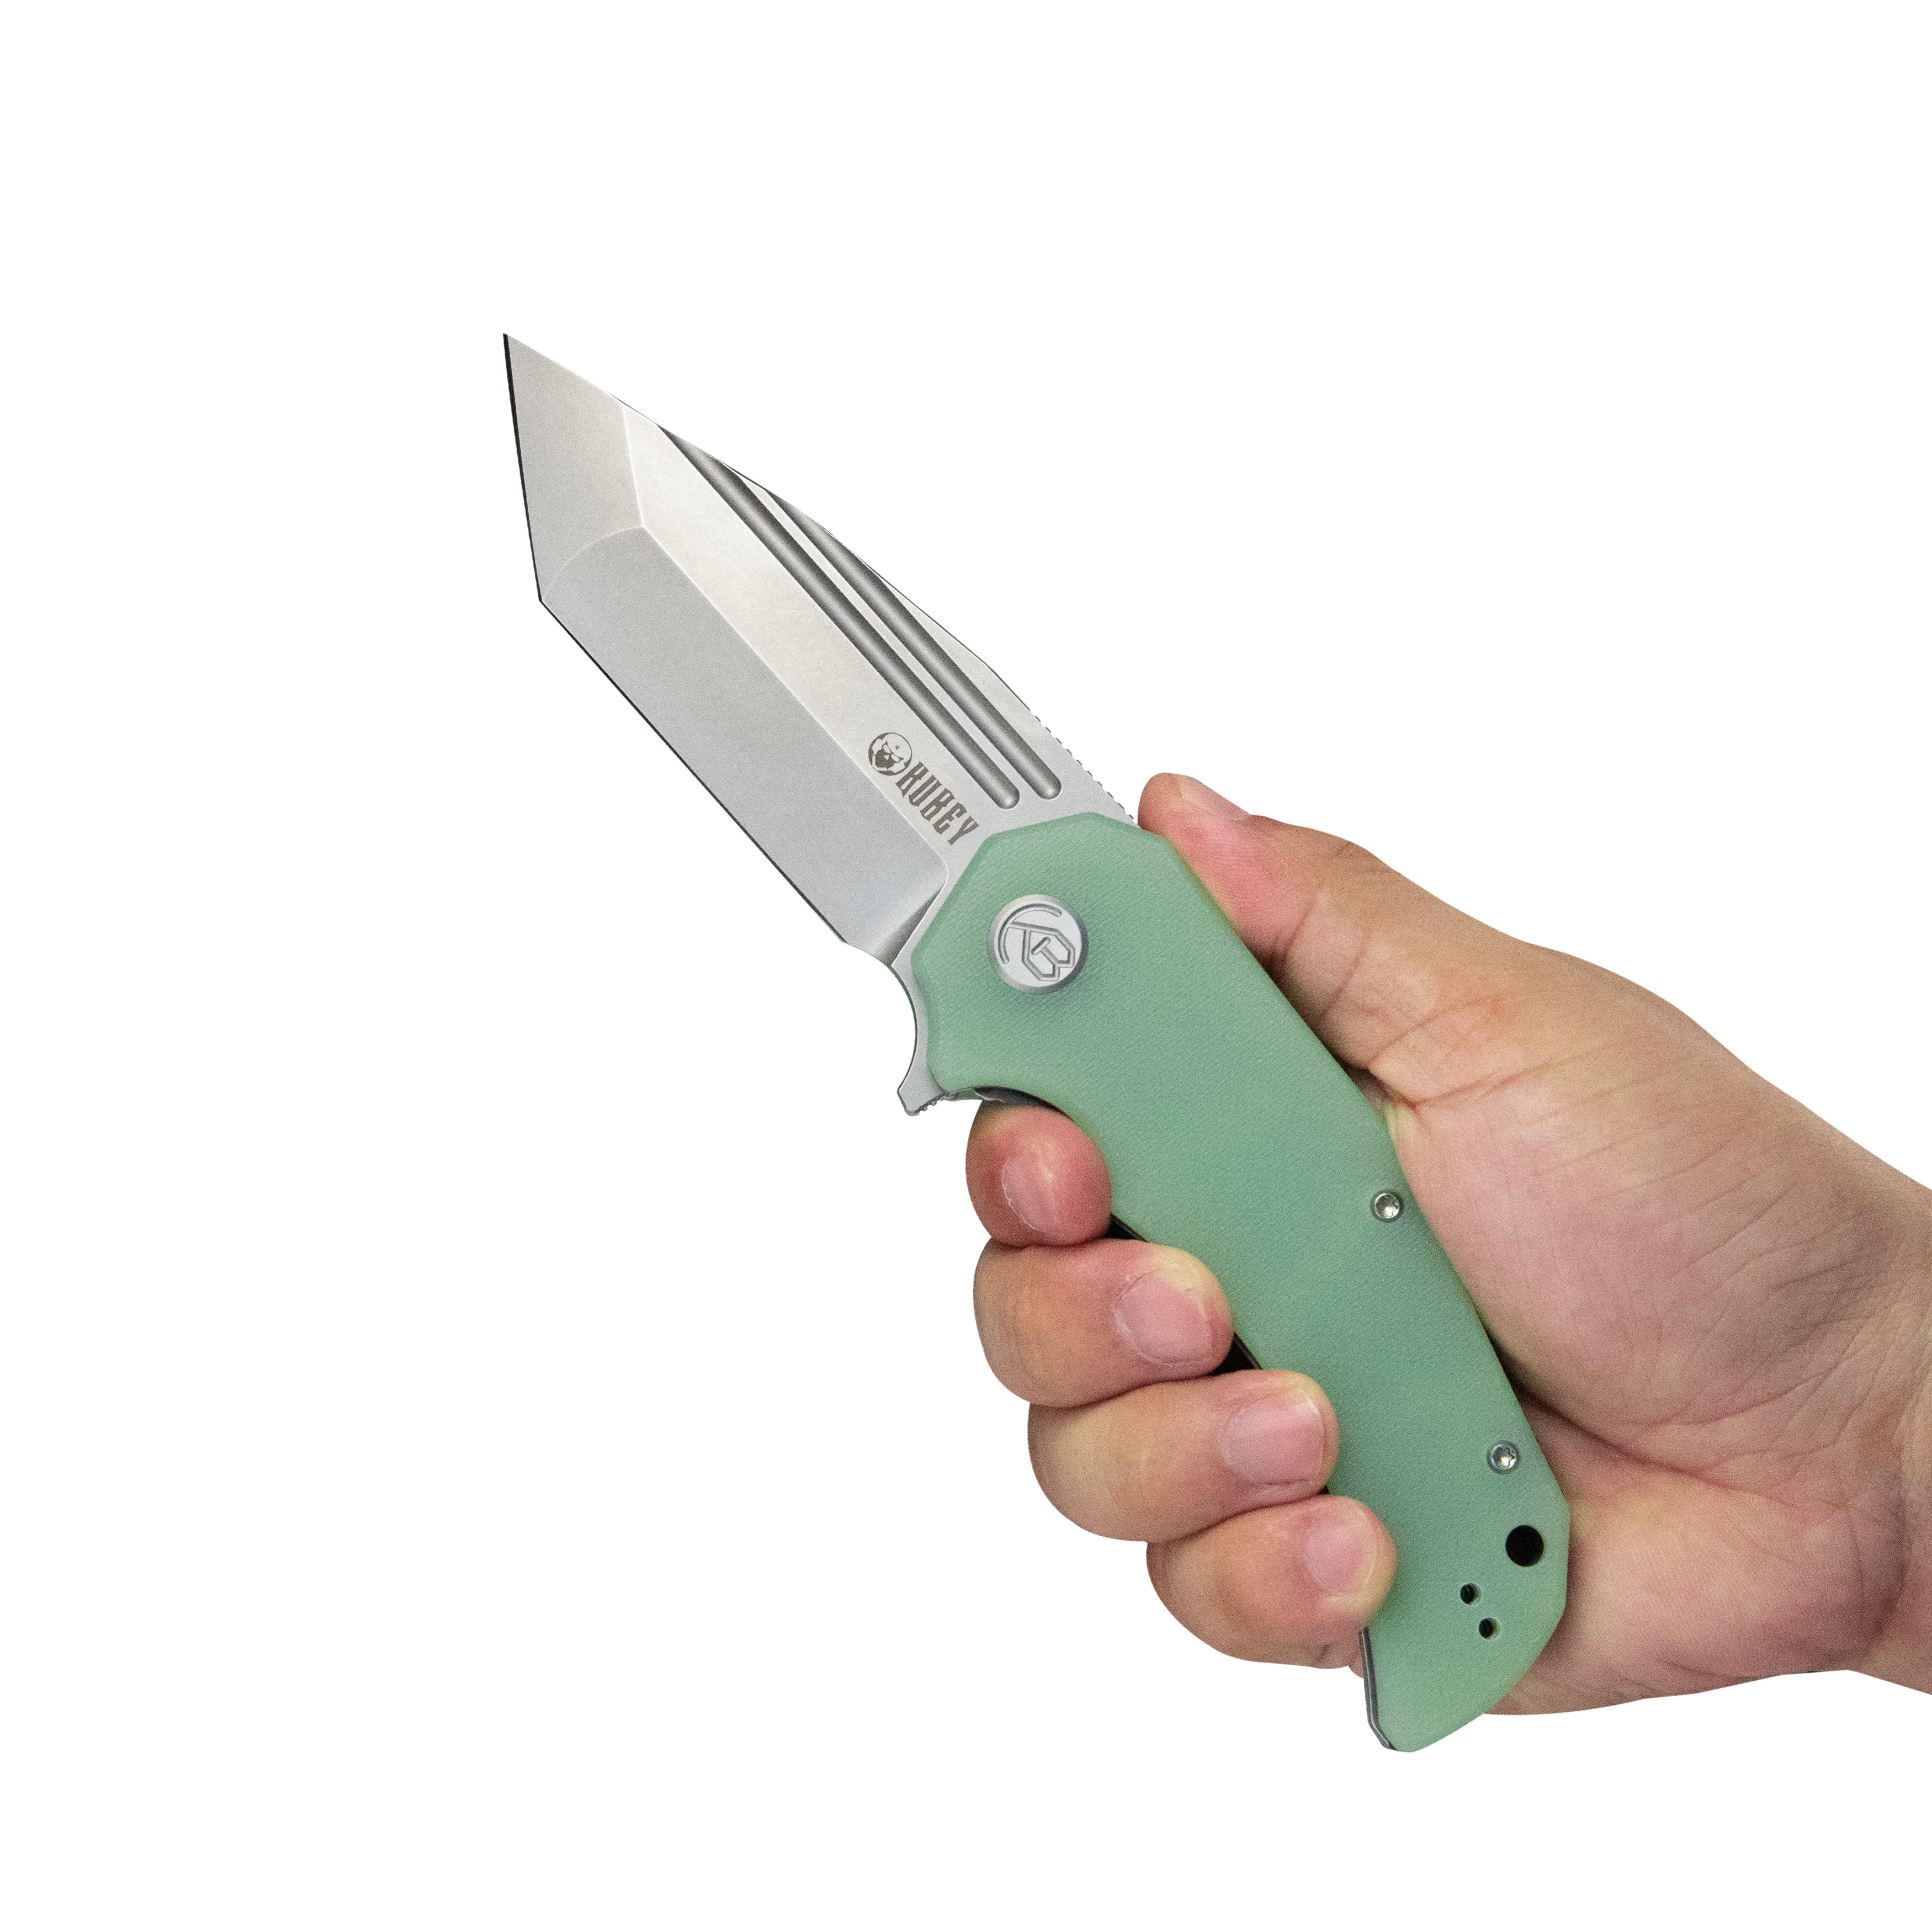 Kubey Mikkel Willumsen Design Bravo one Tanto Outdoor Folding Camping Knife Jade G10 Handle 3.39" Beadblast AUS-10 KU318D